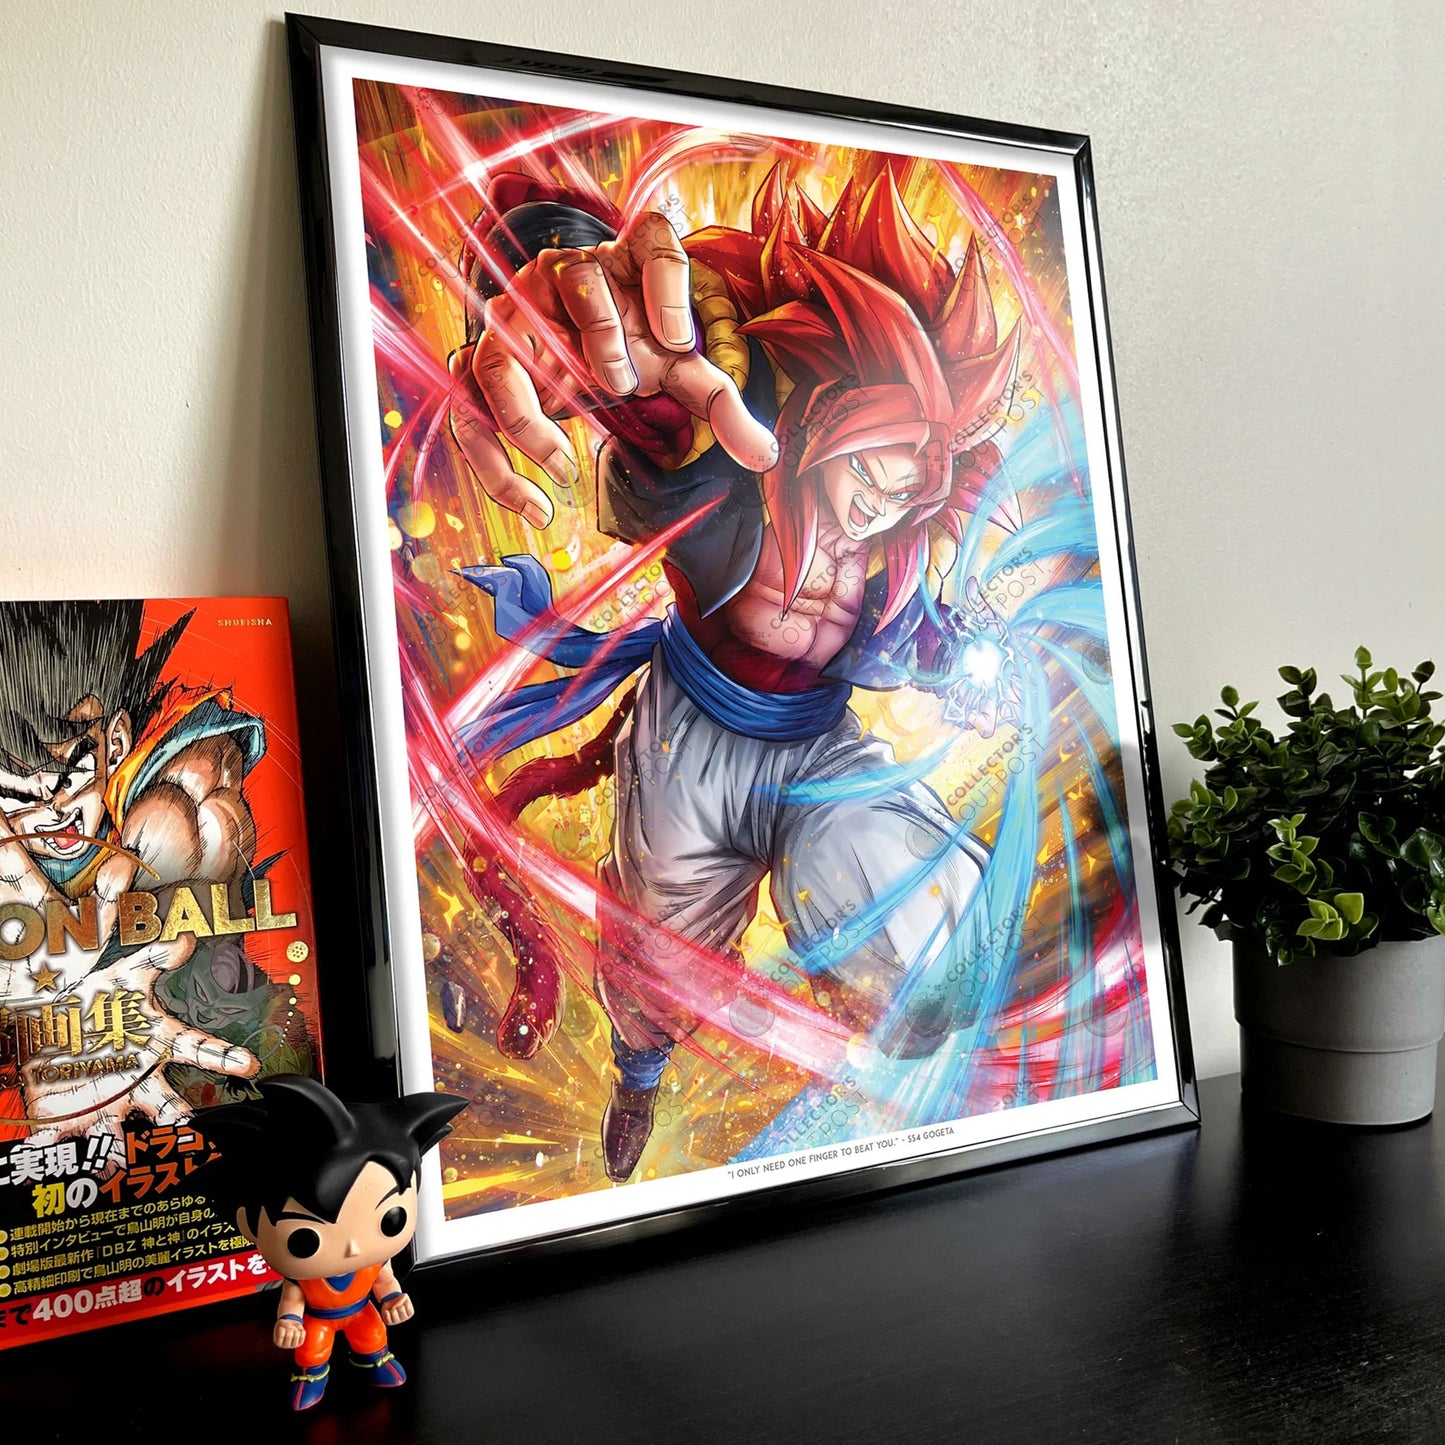 Gogeta Super Saiyan 4 "Legendary Fusion" (Dragon Ball Z) Premium Art Print